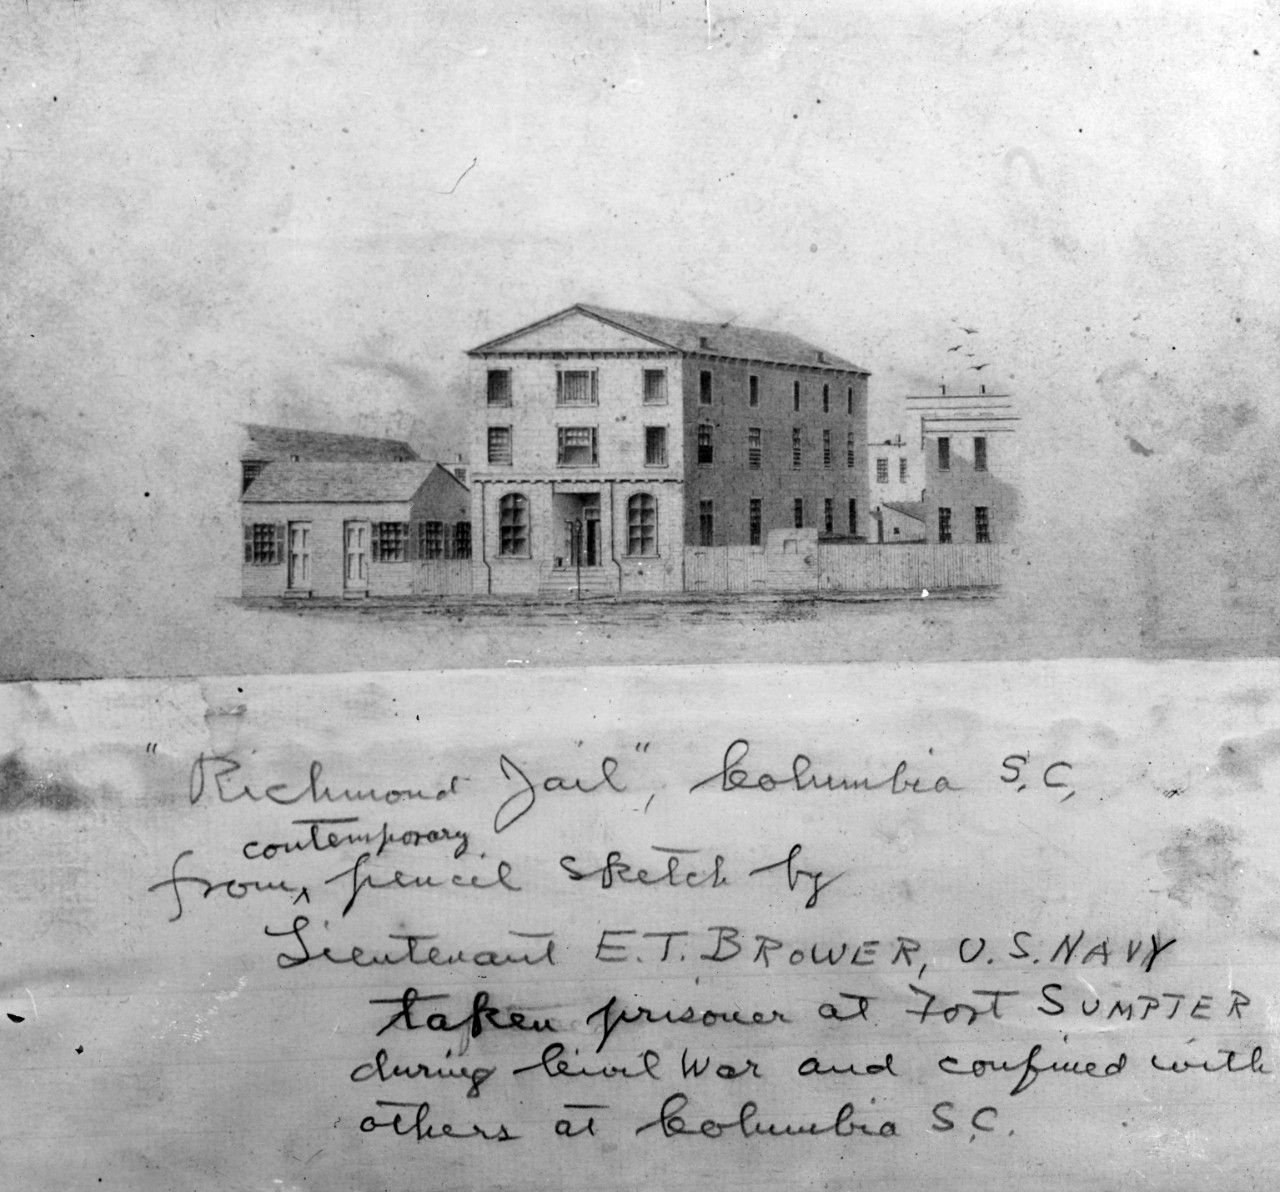 Richmond Jail, Columbia, South Carolina, circa 1861-1865.